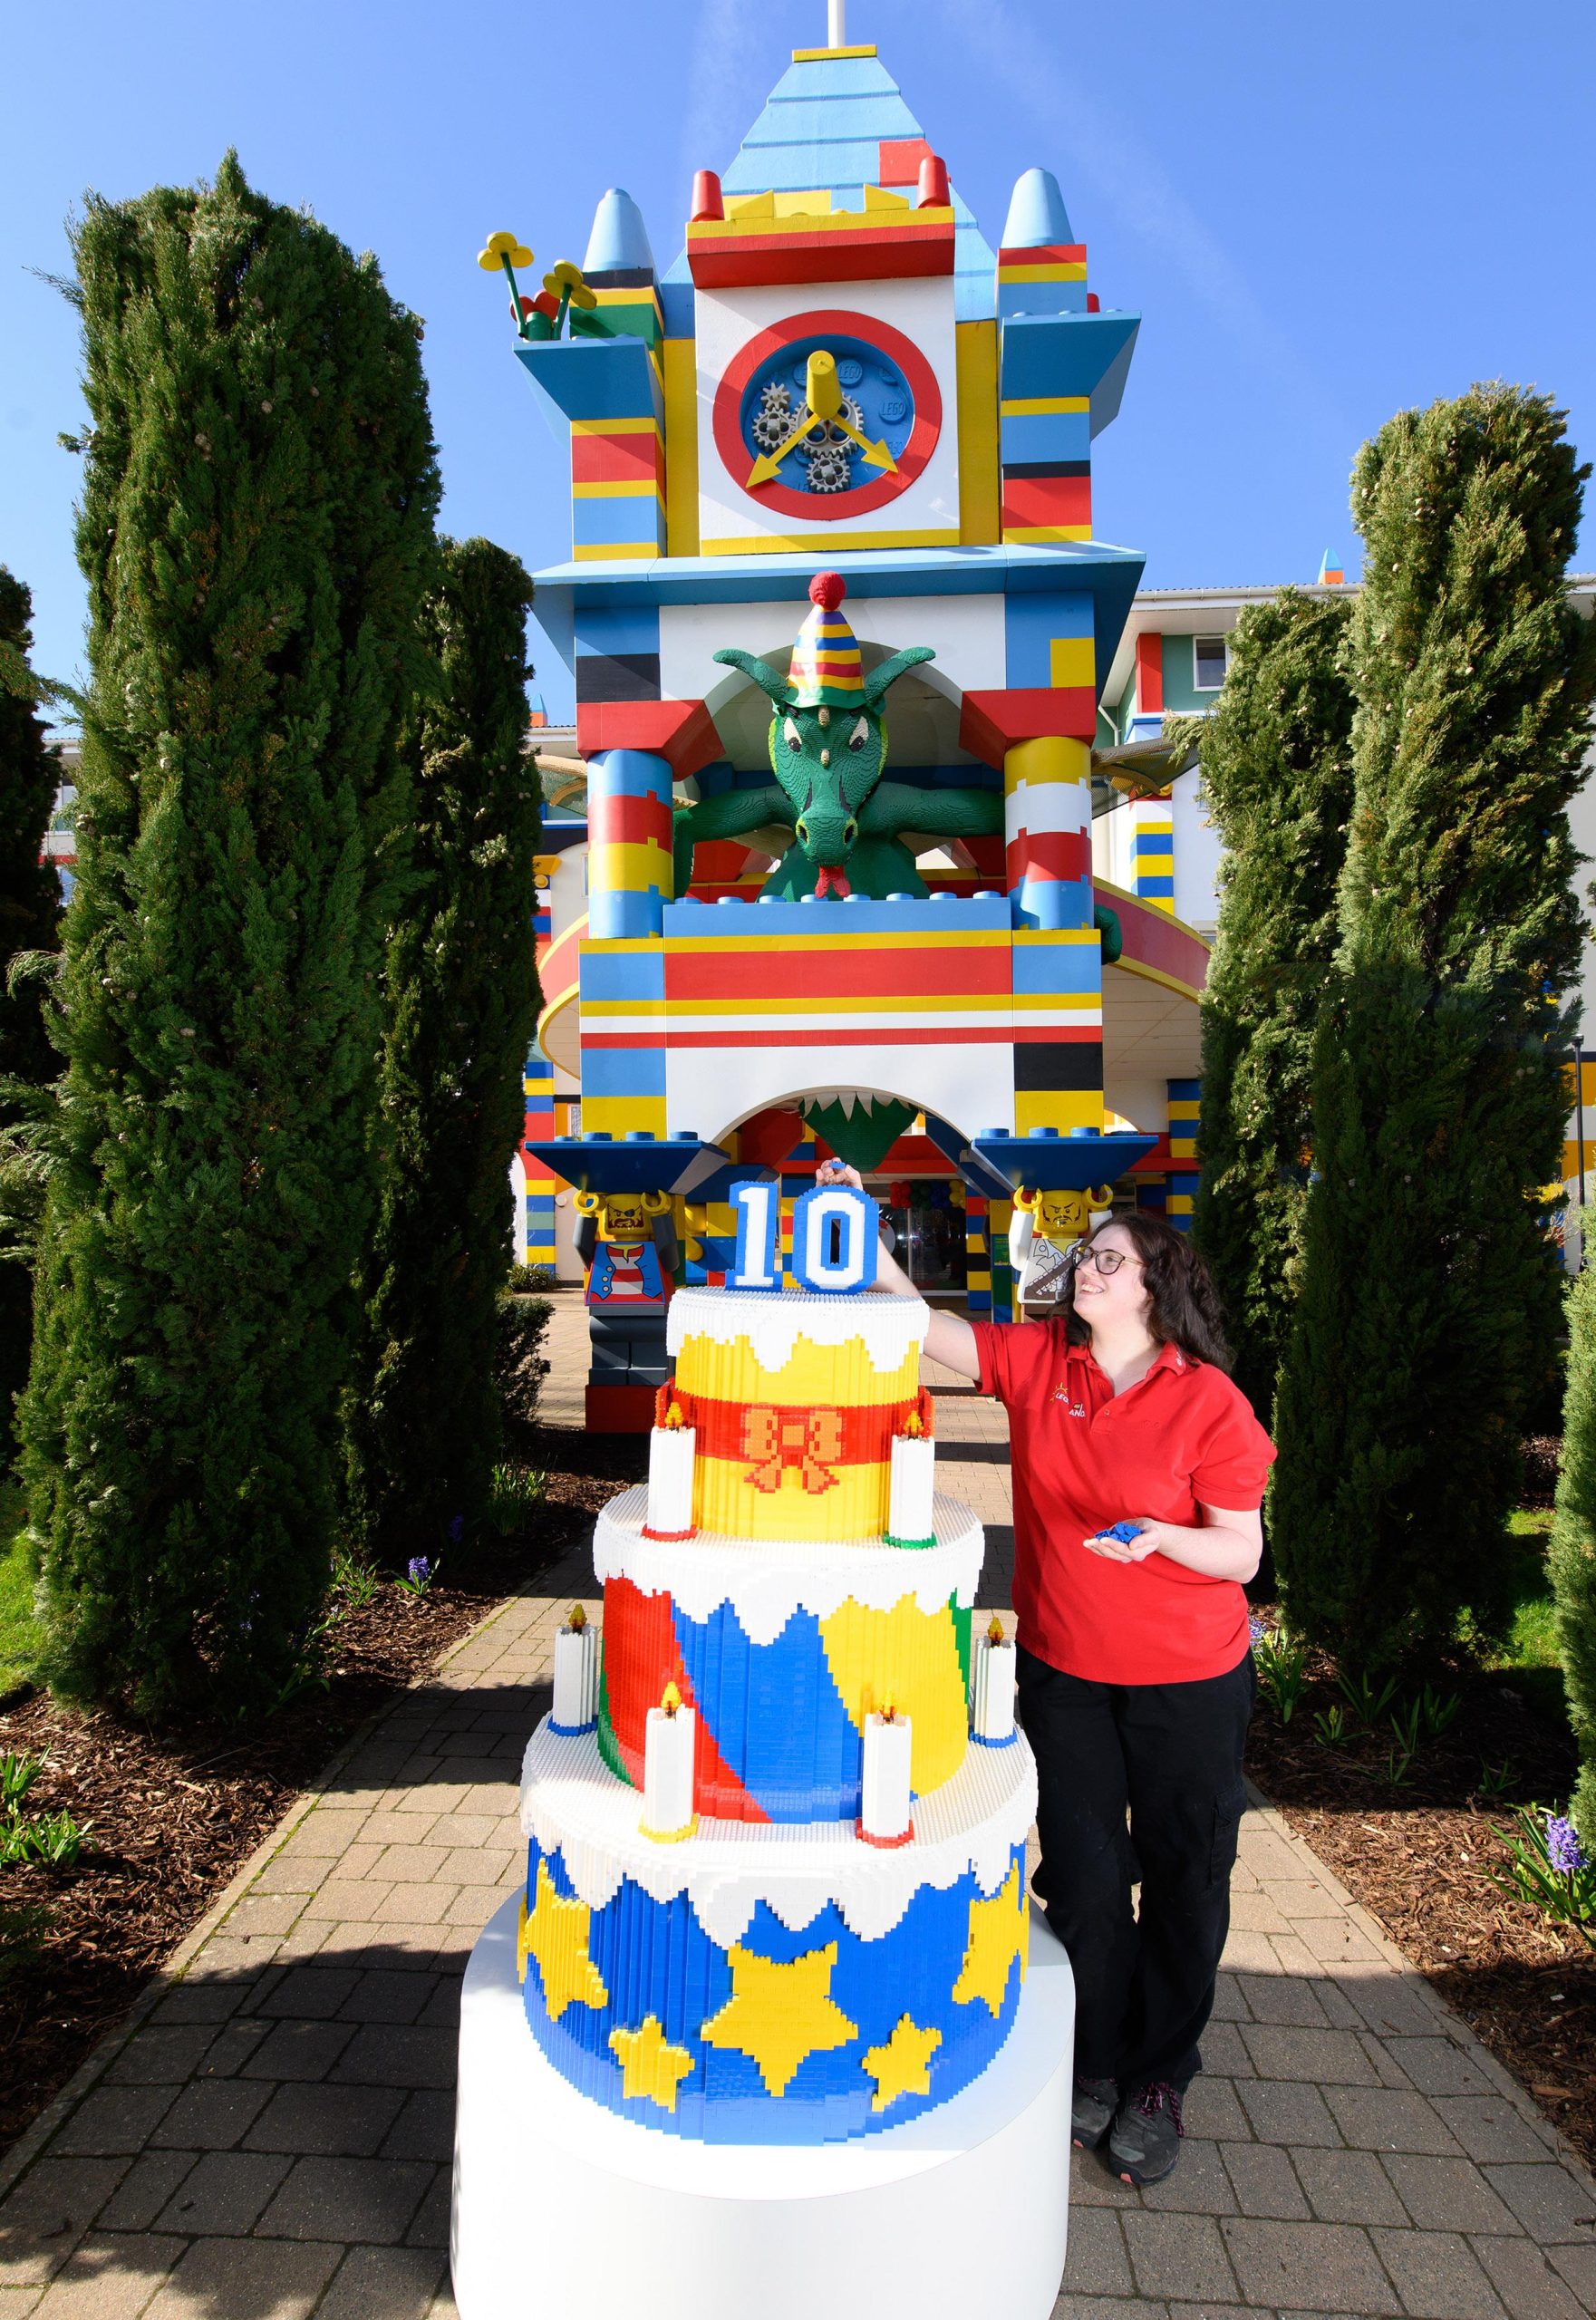 Huge Lego Brick Cake built to celebrate Legoland Windsor Resort opening